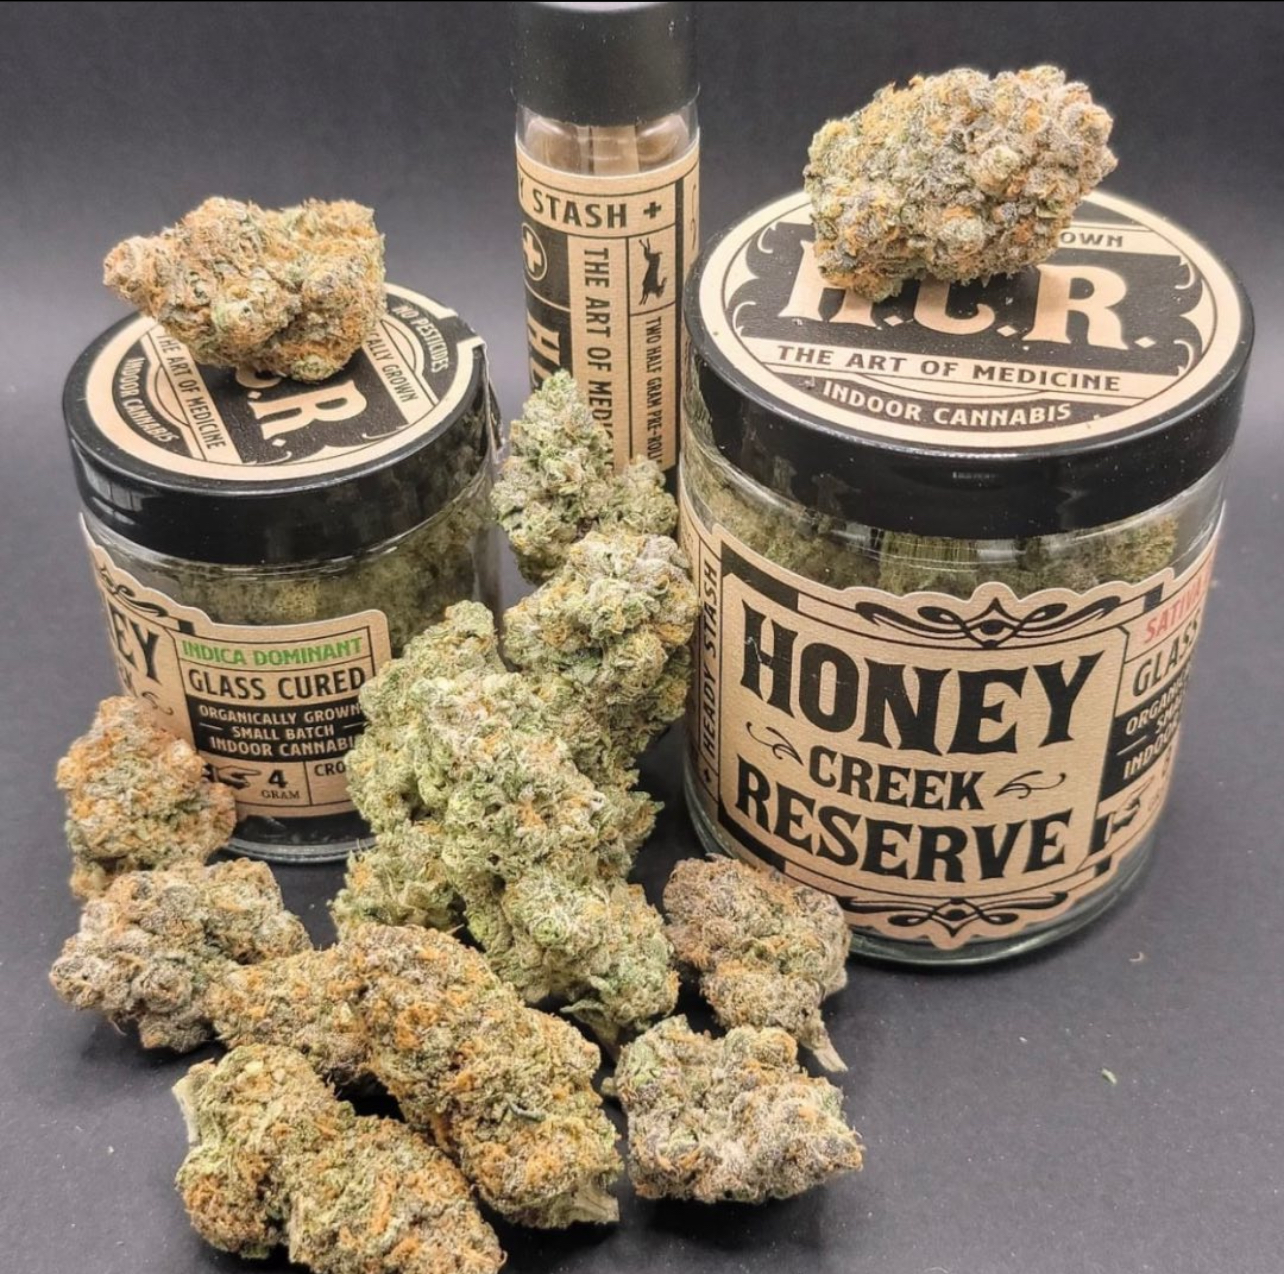 Honey Creek Reserve Cannabis in flower and prerolls